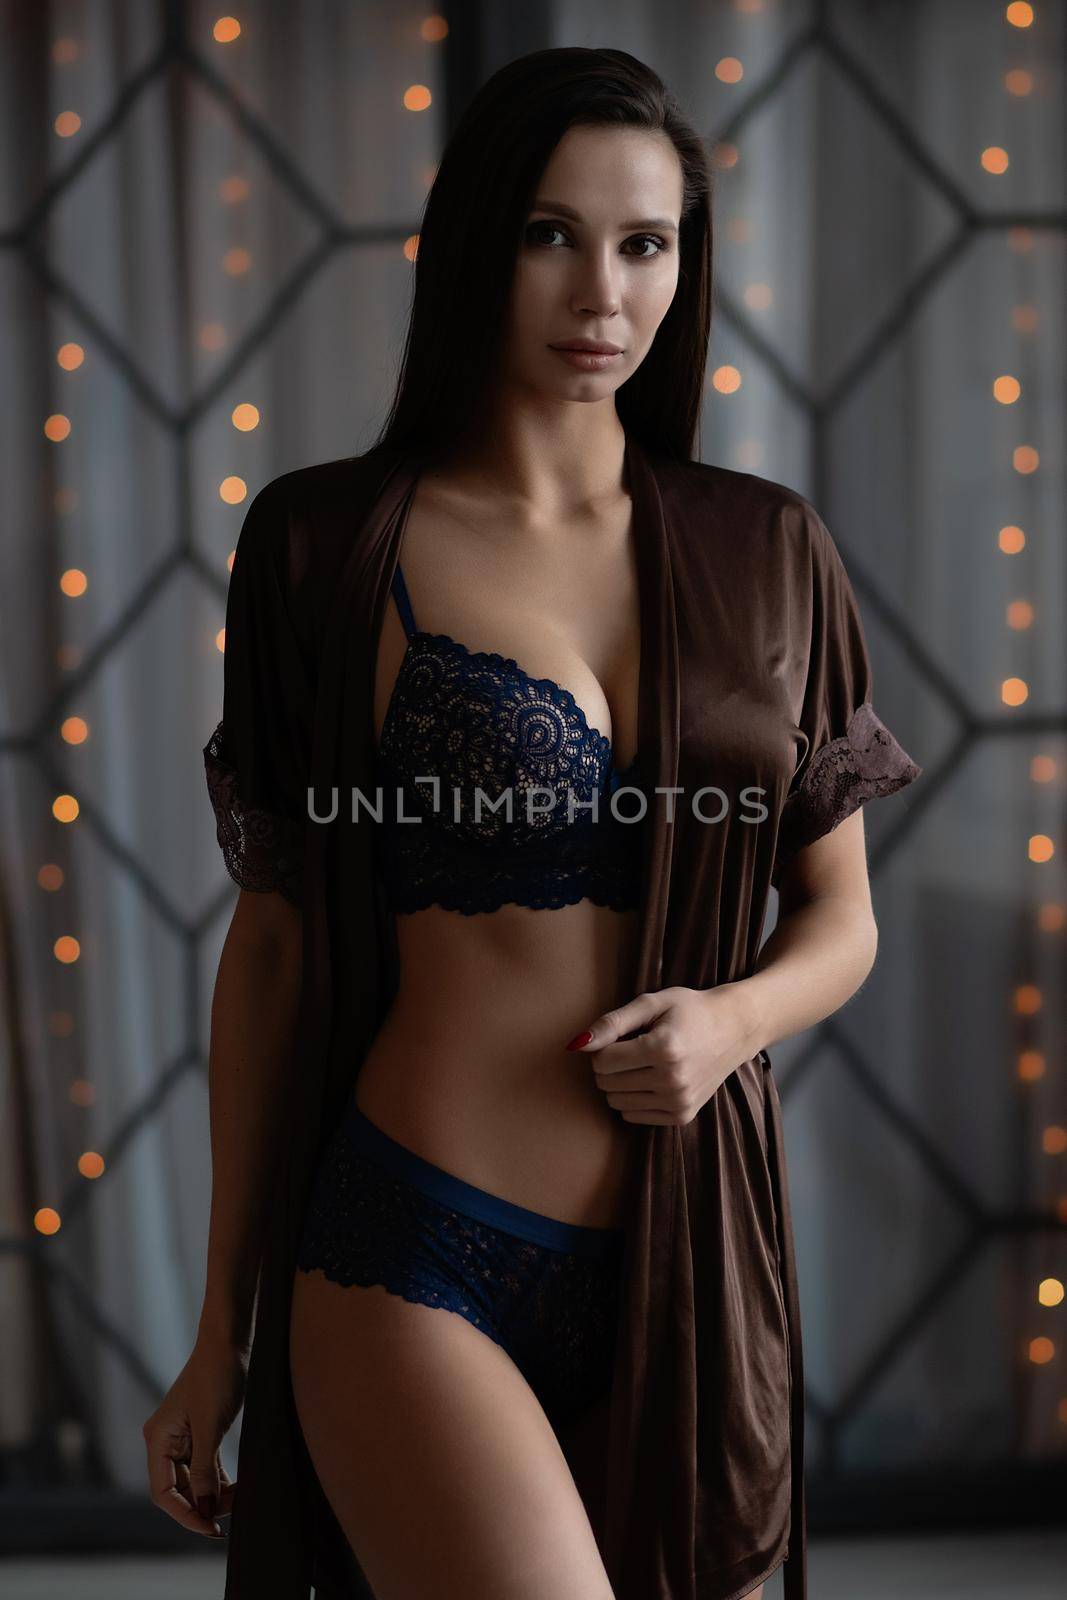 Alluring woman in underwear and silk robe by 3KStudio